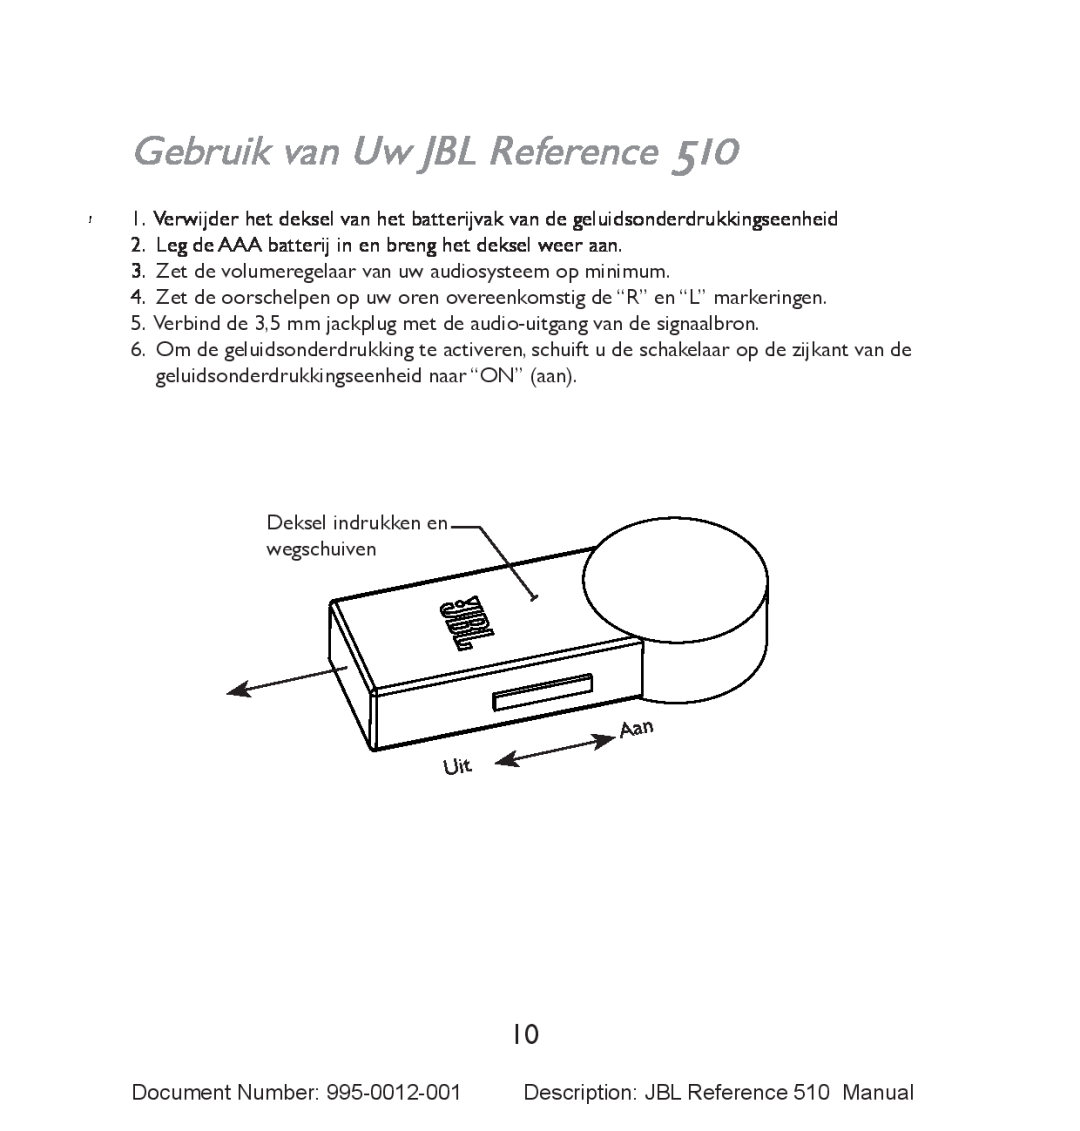 JBL 510 manual Gebruik van Uw JBL Reference 